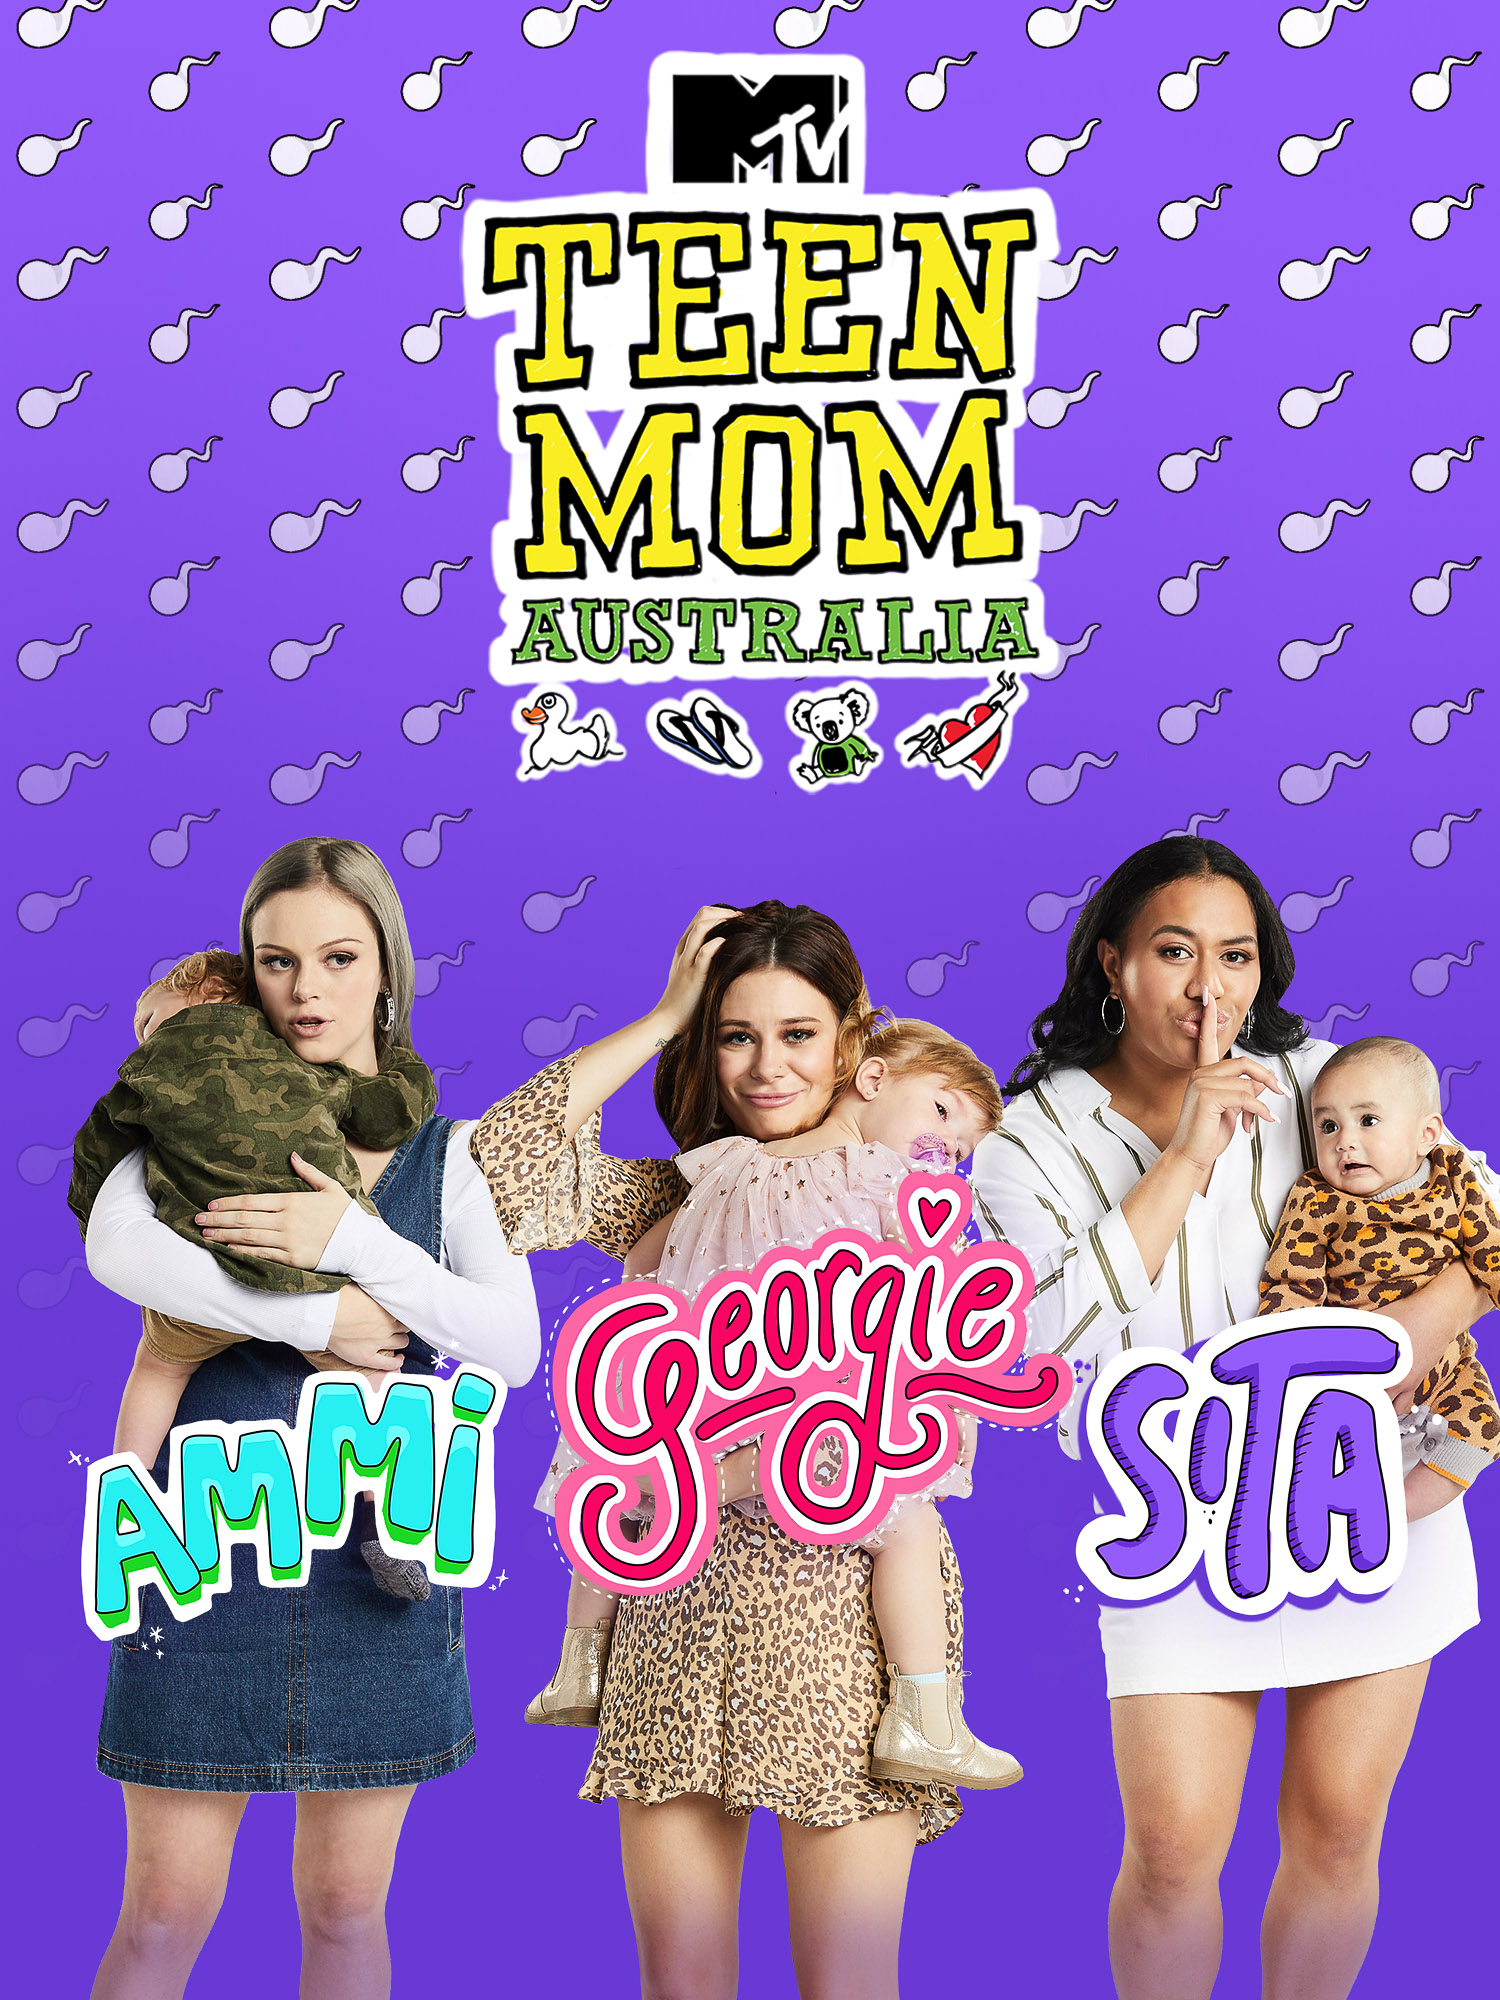 Teen Mom Australia - MTV